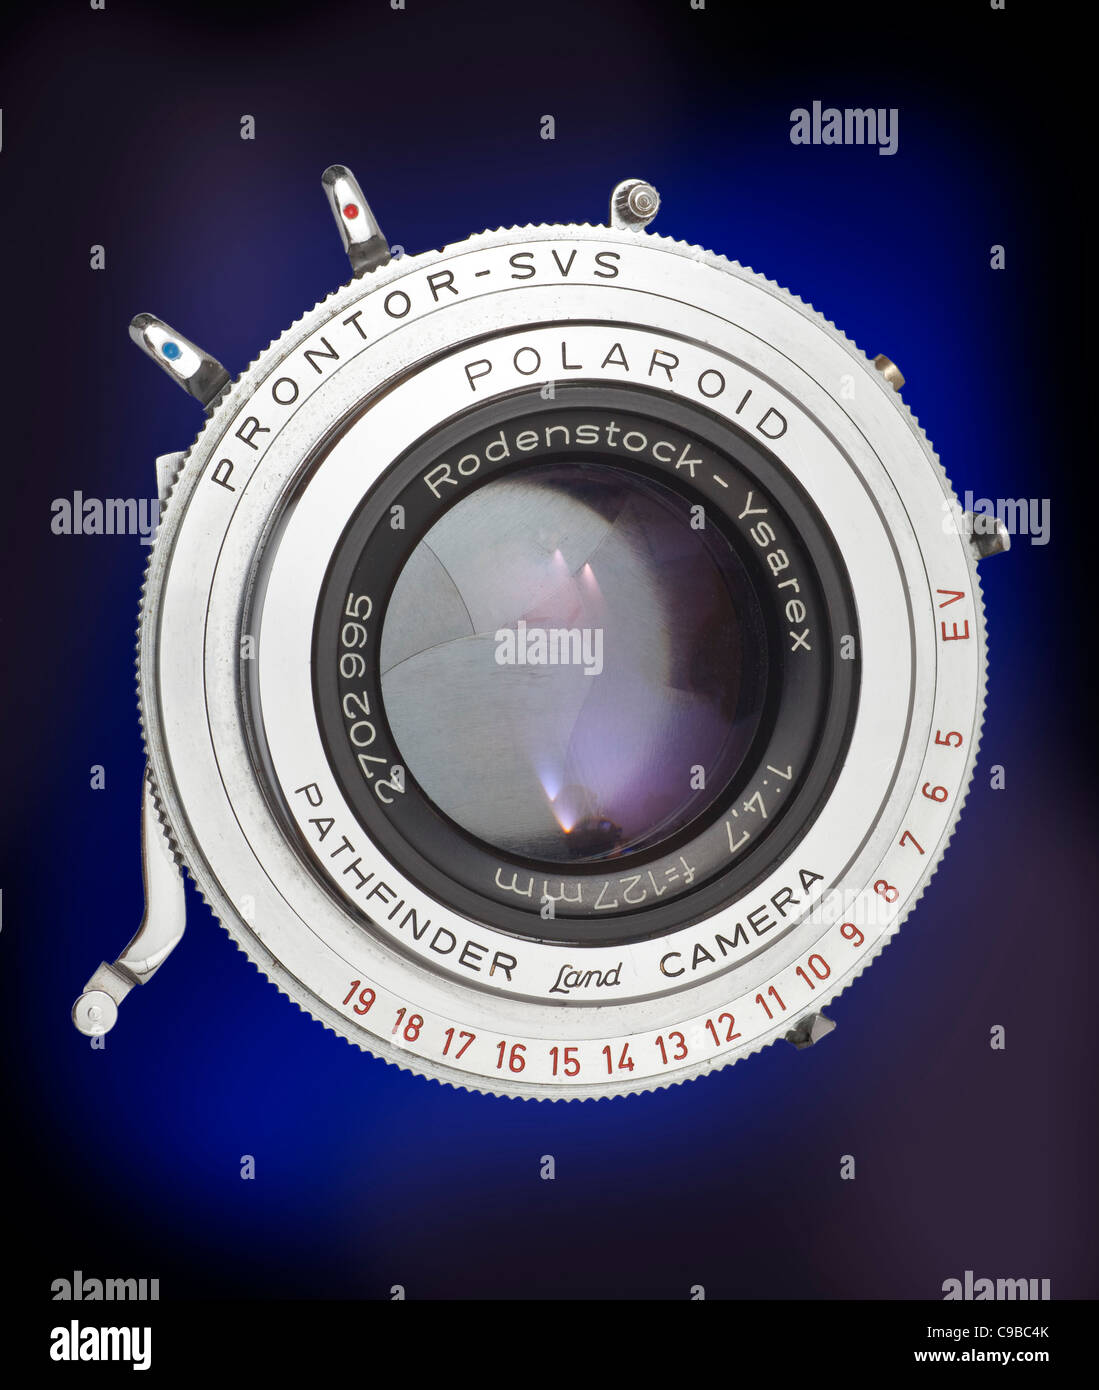 Rodenstock Ysarex Objektiv und Blatt Auslöser von Polaroid Land Kamera Stockfoto